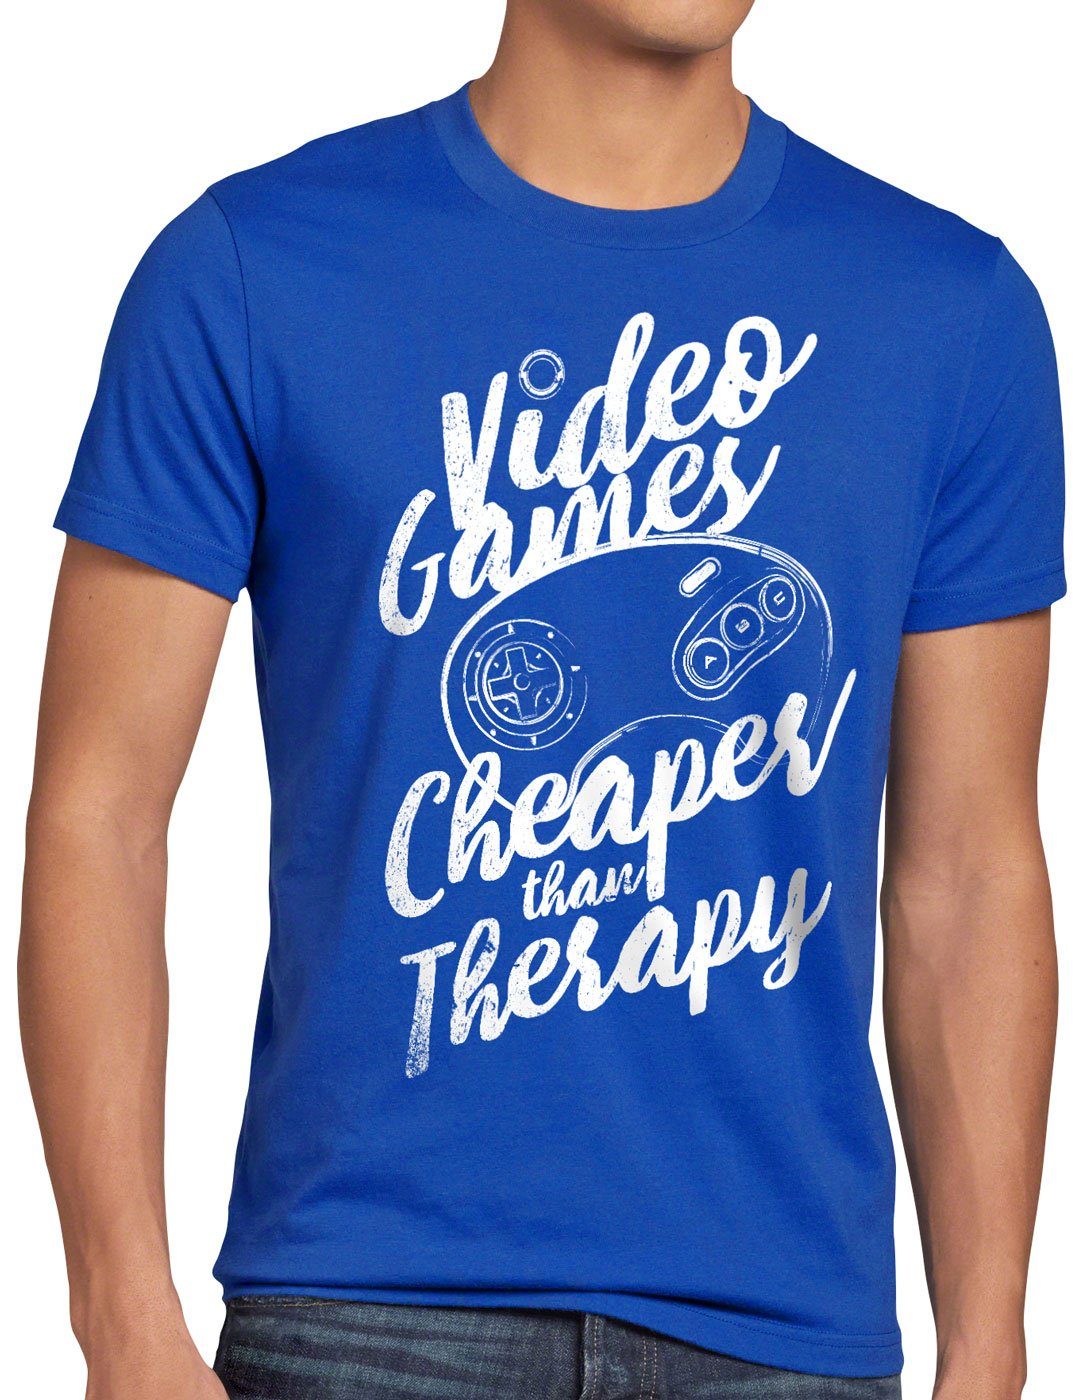 sonic Herren gamer Print-Shirt blau retro style3 Video konsole drive classic Therapy T-Shirt Game